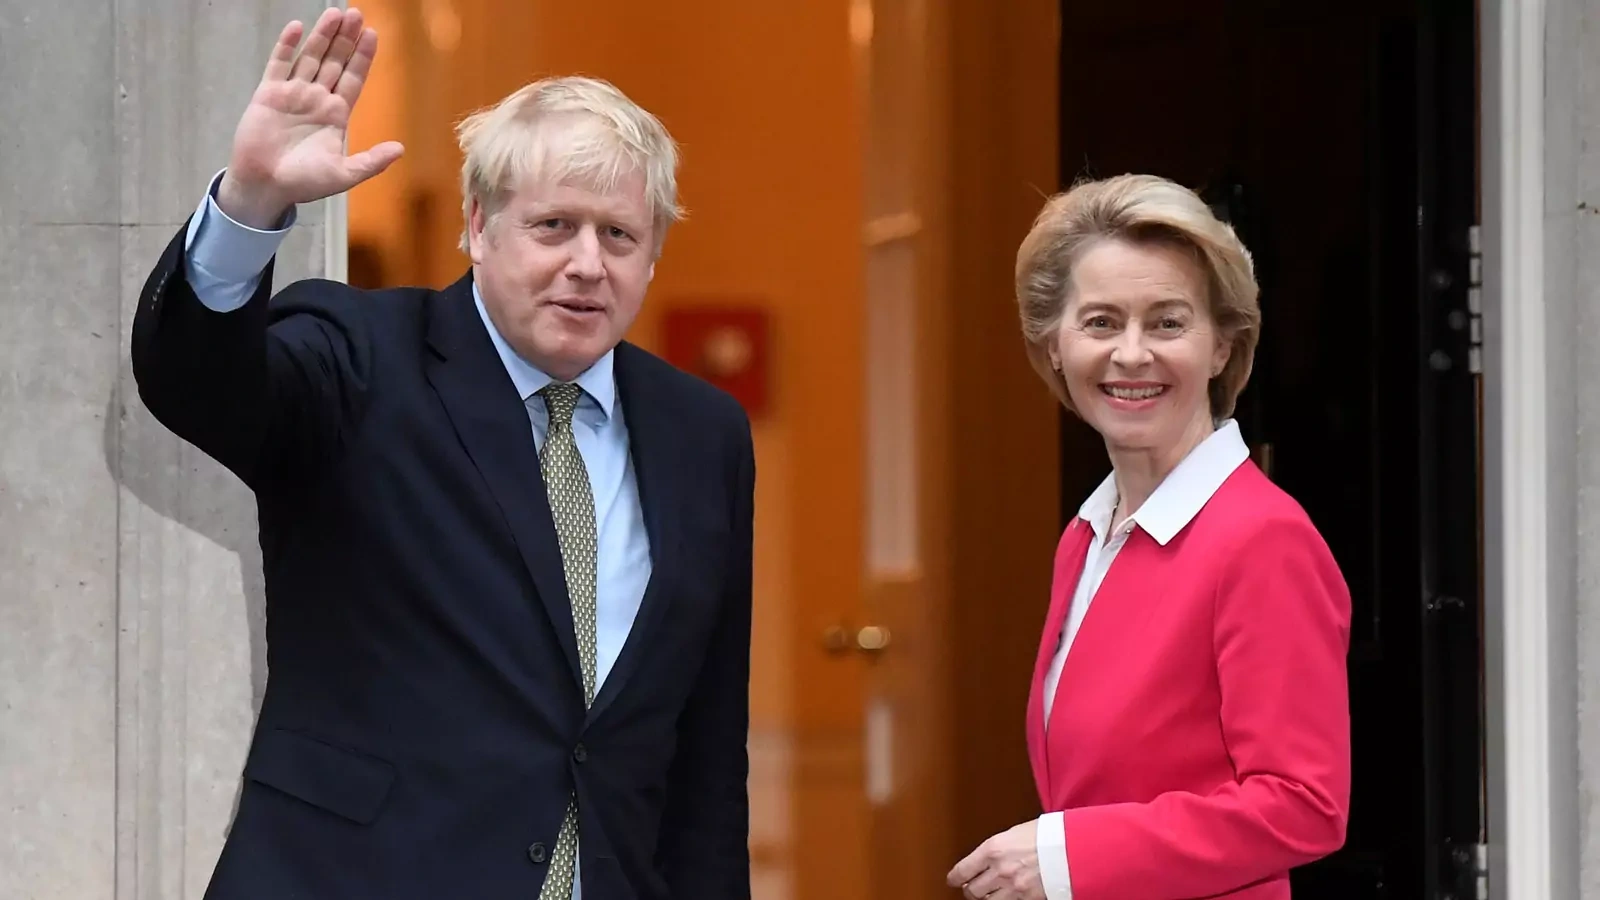 British Prime Minister Boris Johnson meets European Commission President Ursula von der Leyen in London on January 8, 2020.